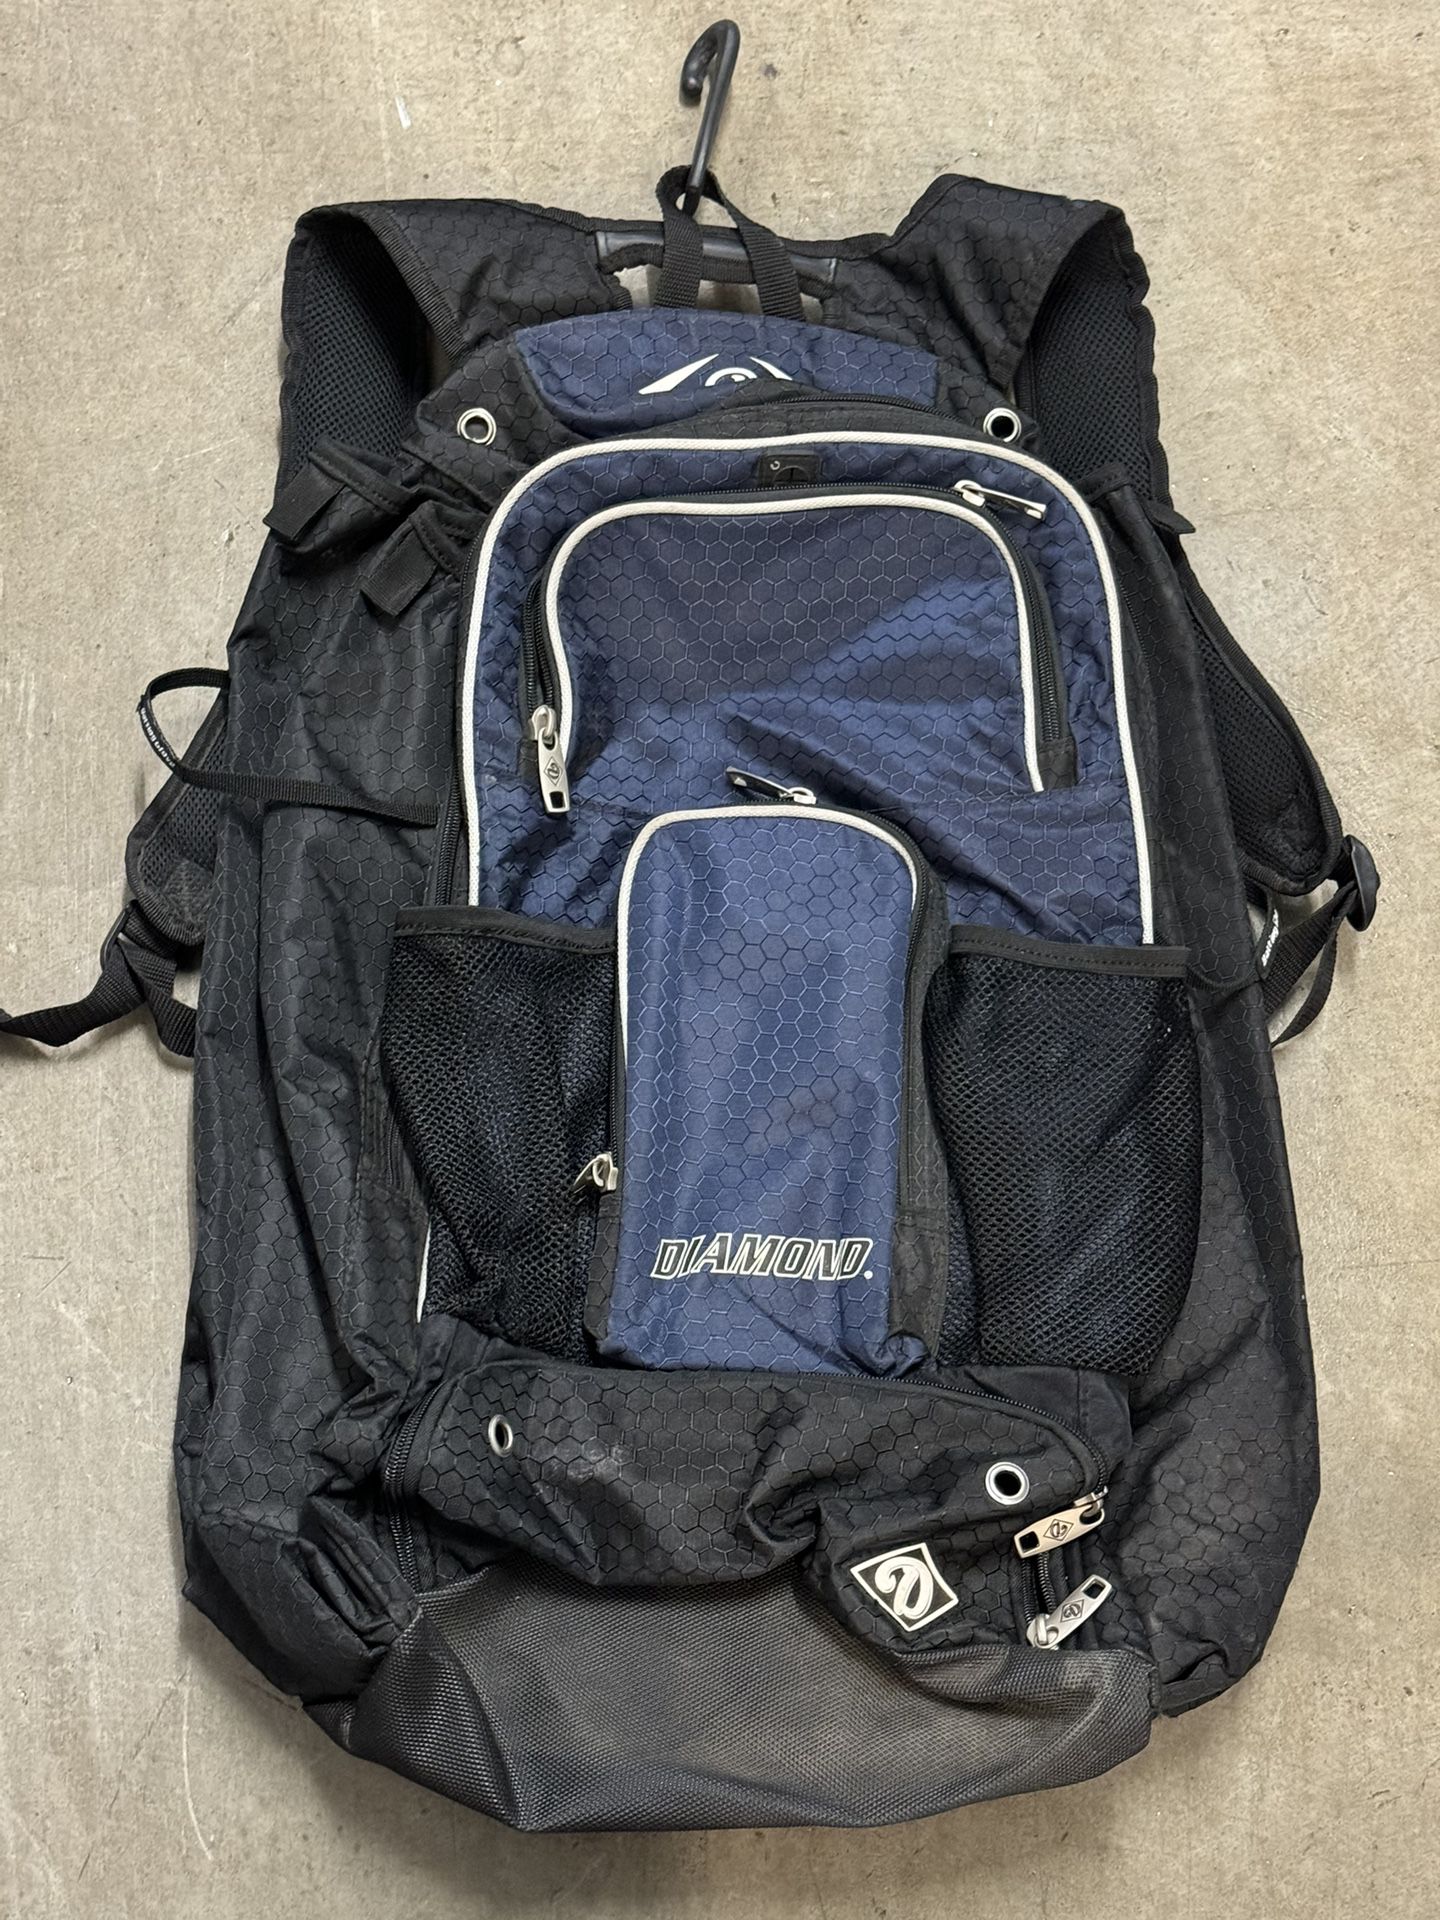 Diamond Sports IX3 Baseball Bat Backpack Blue/Black NEW Softball ⚾️  Bag